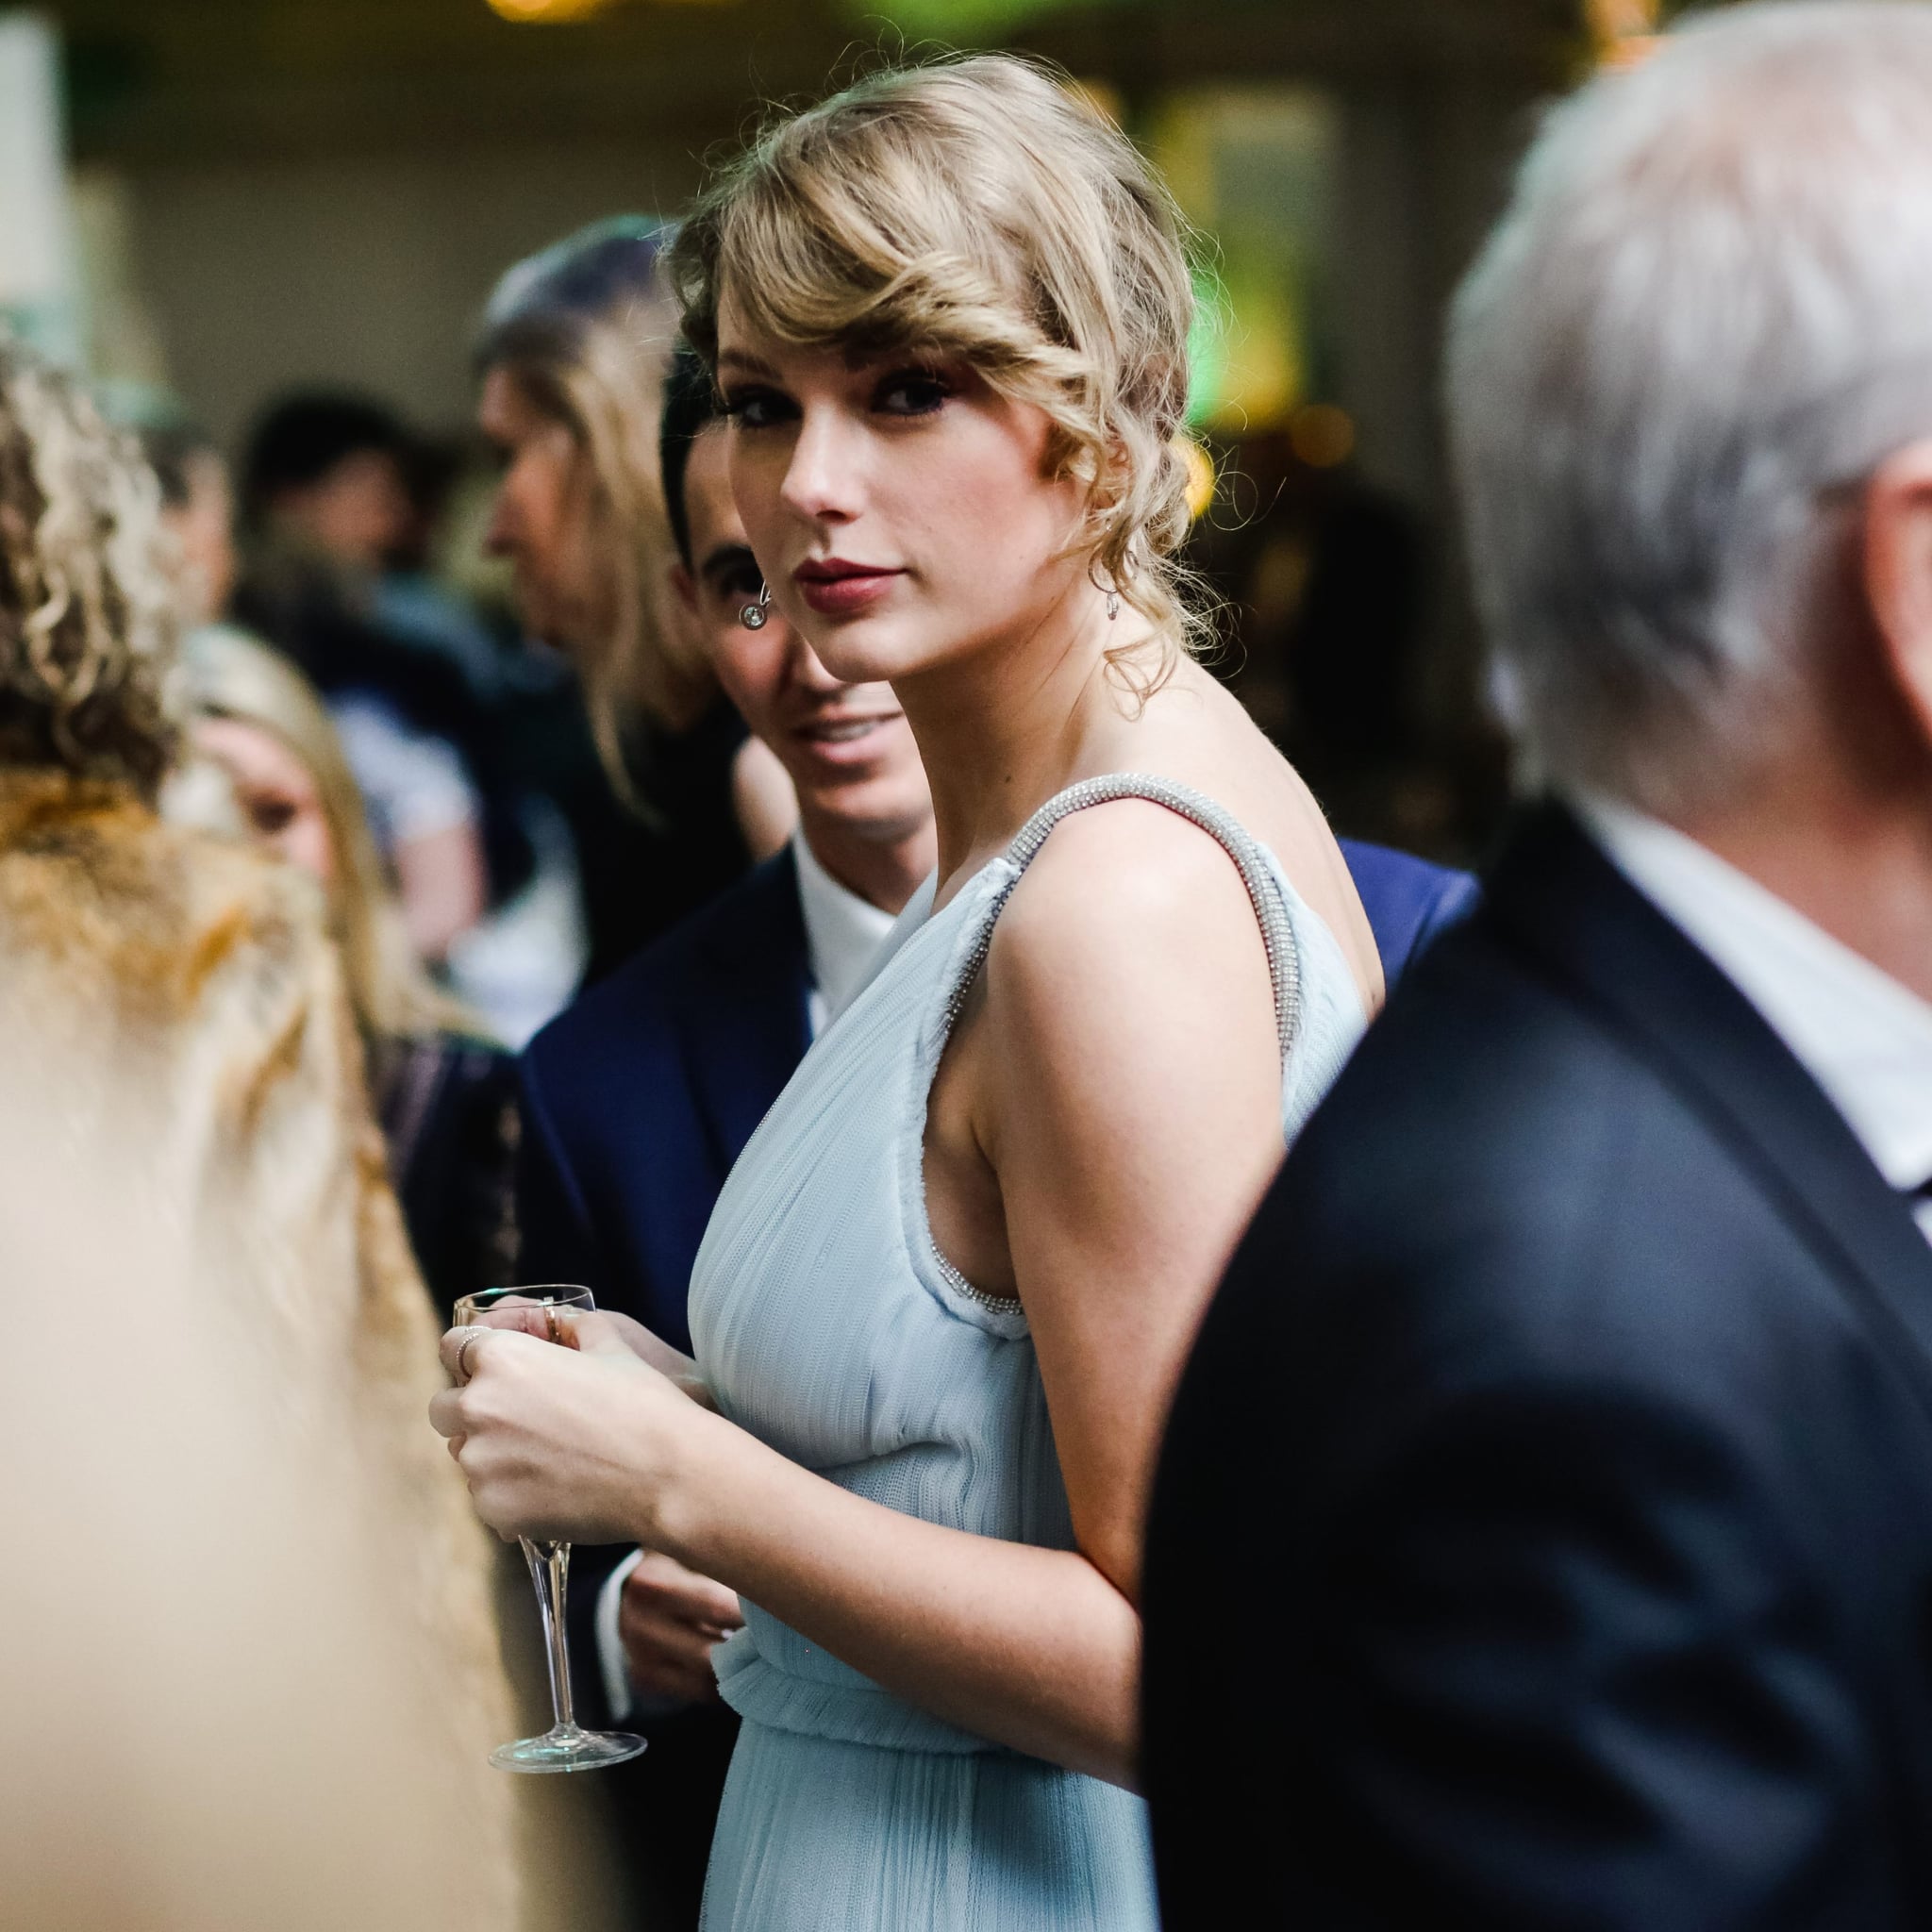 Taylor Swift Stella Mccartney Dress At The Bafta Awards 2019